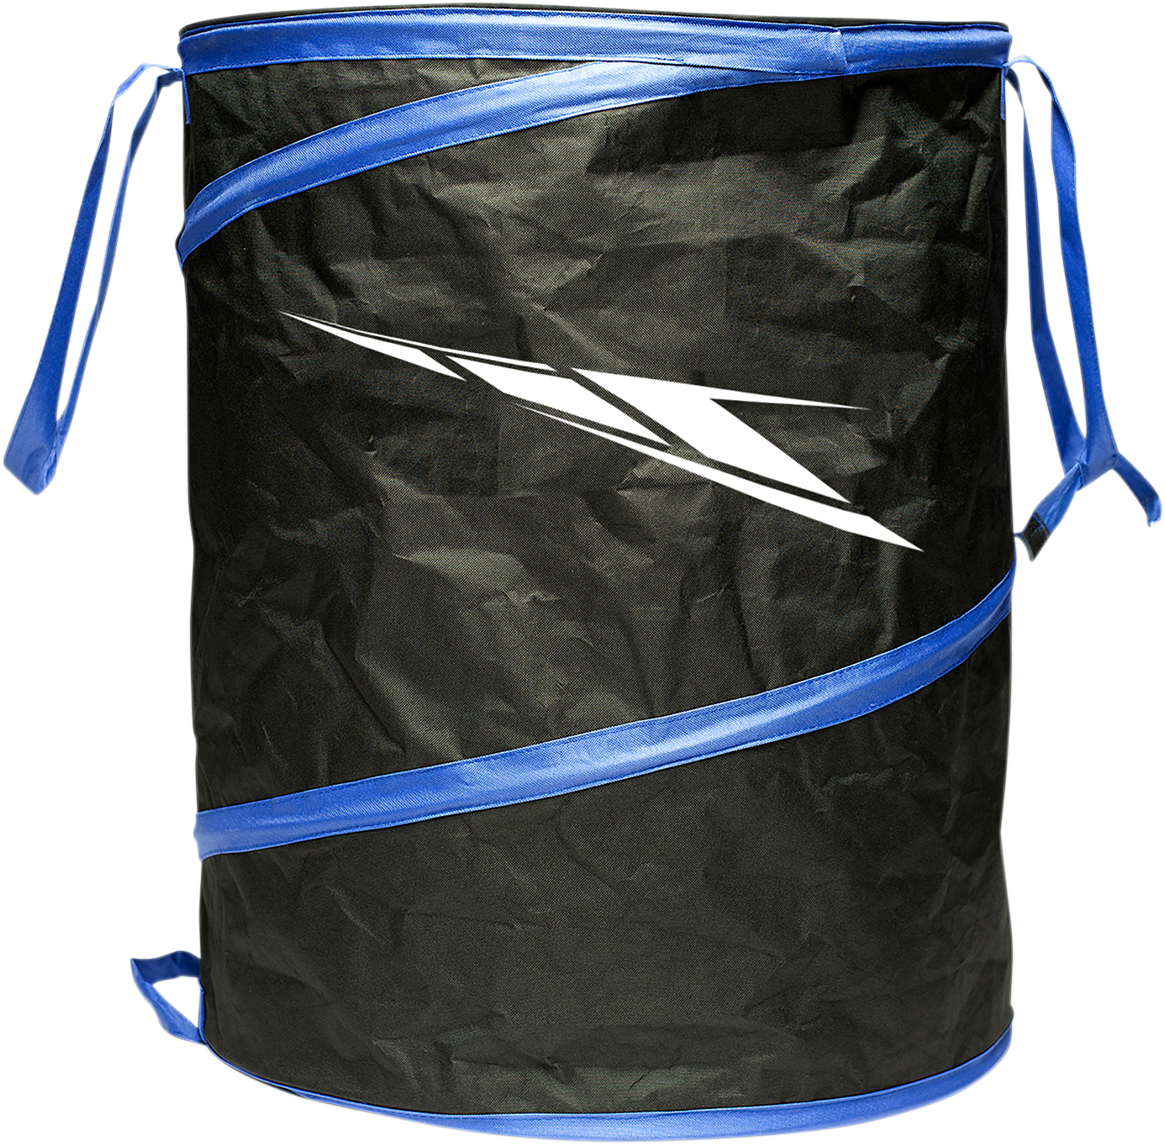 FACTORY EFFEX Trash Can - Black/Blue - Yamaha Strobe NOT CLOSEOUT ITEM 22-45260